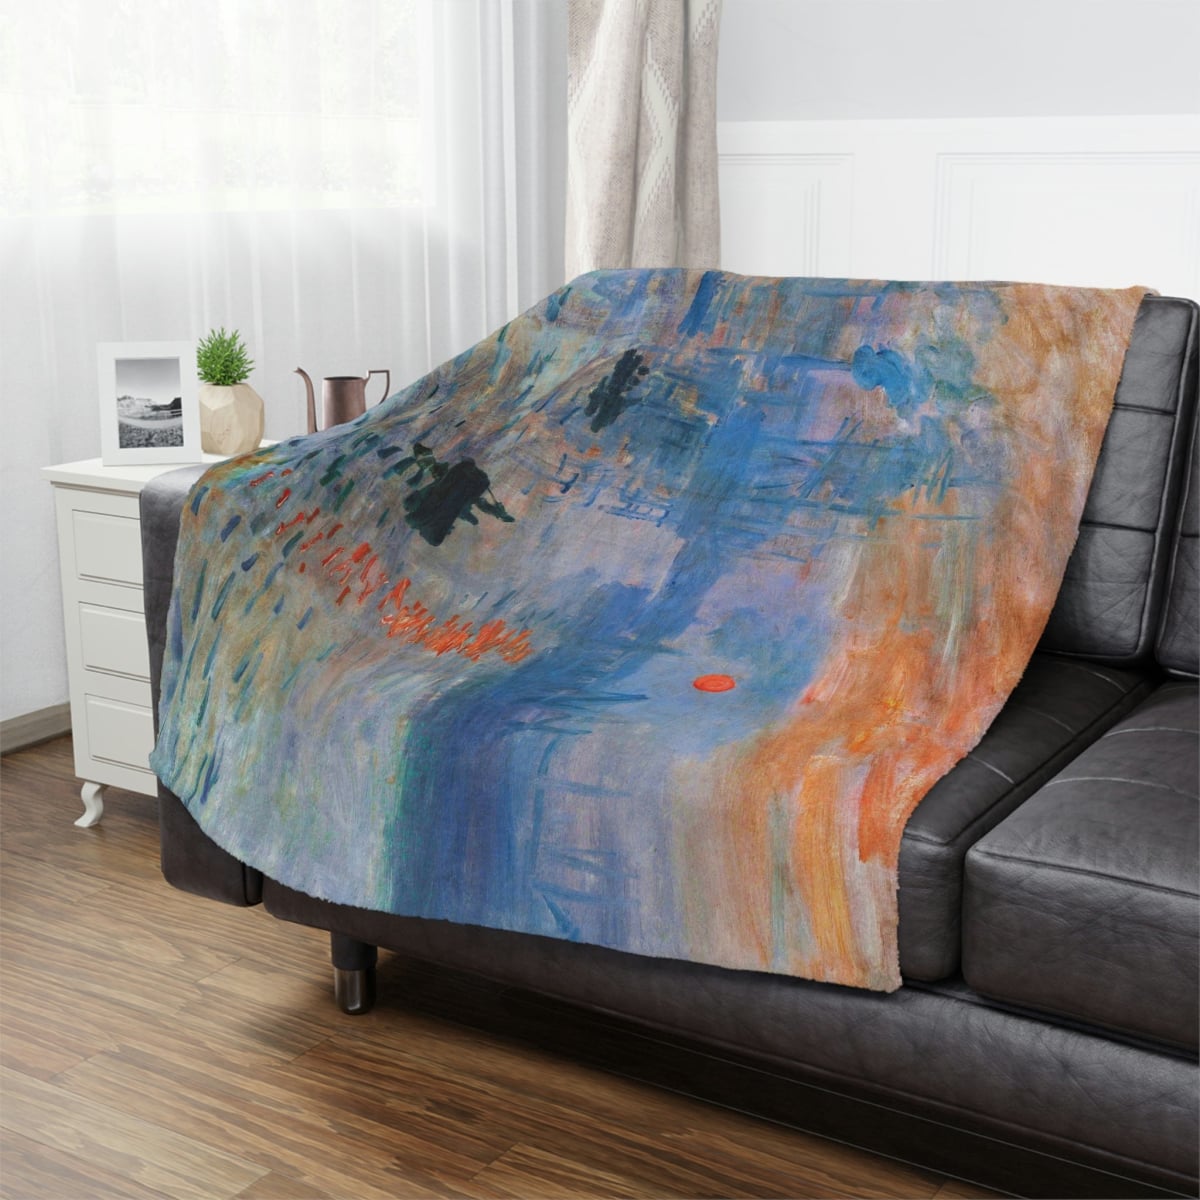 Luxurious Art Blanket in Home Setting